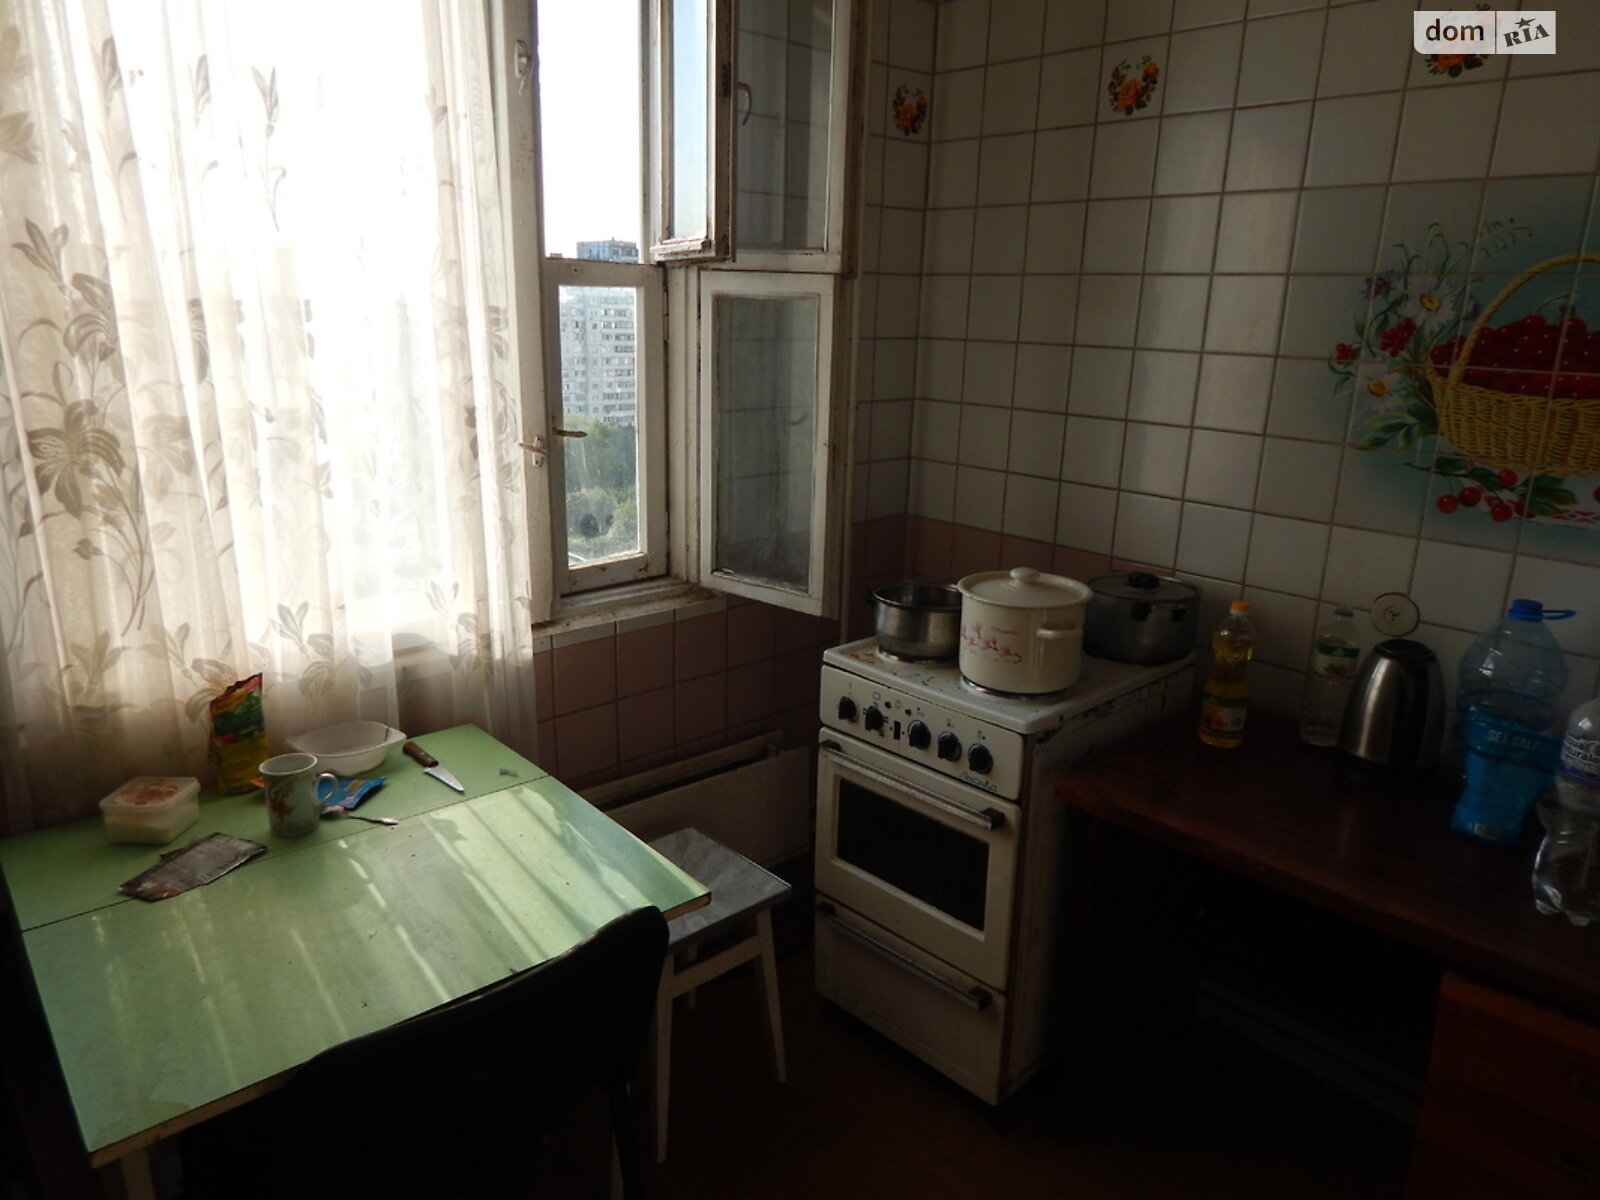 Продажа трехкомнатной квартиры в Киеве, на ул. Архитектора Николаева 9А, район Деснянский фото 1